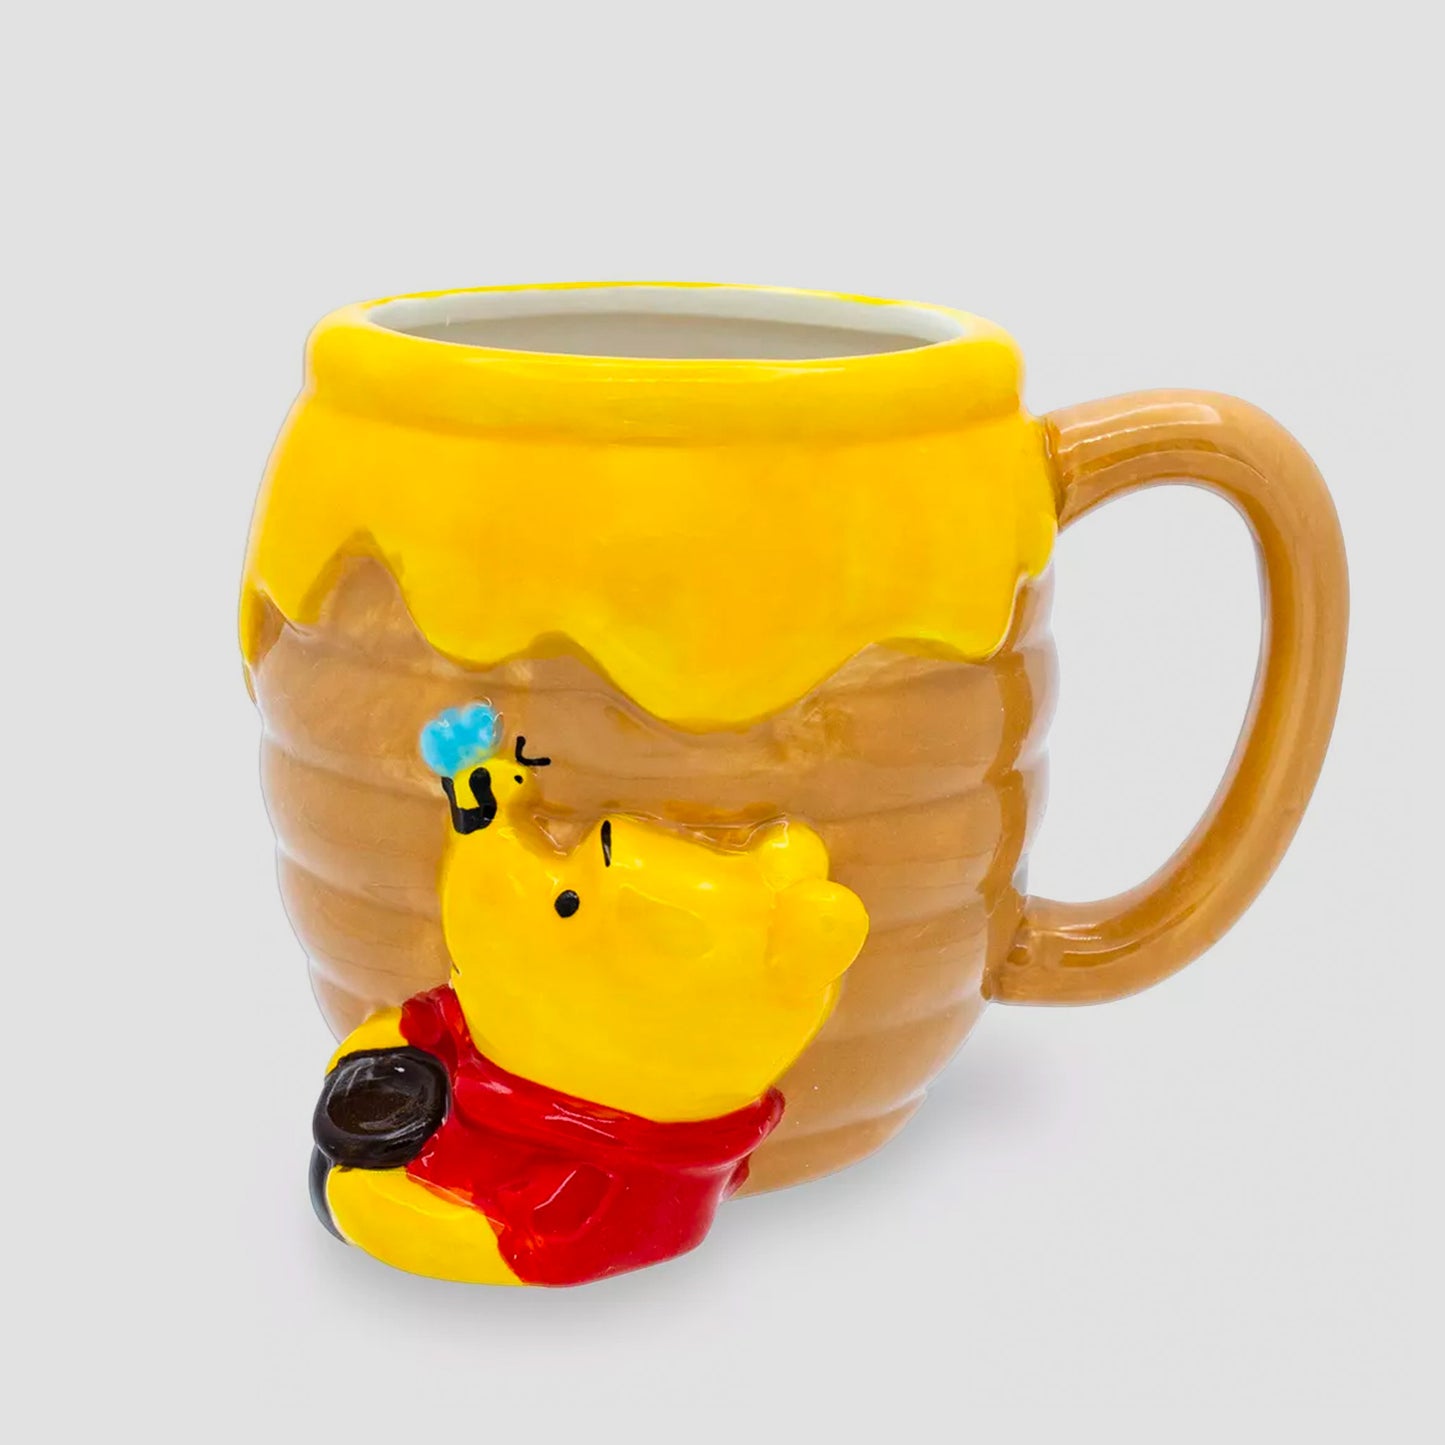 Pooh with Hunny (Winnie the Pooh) Disney Sculpted Ceramic Mug